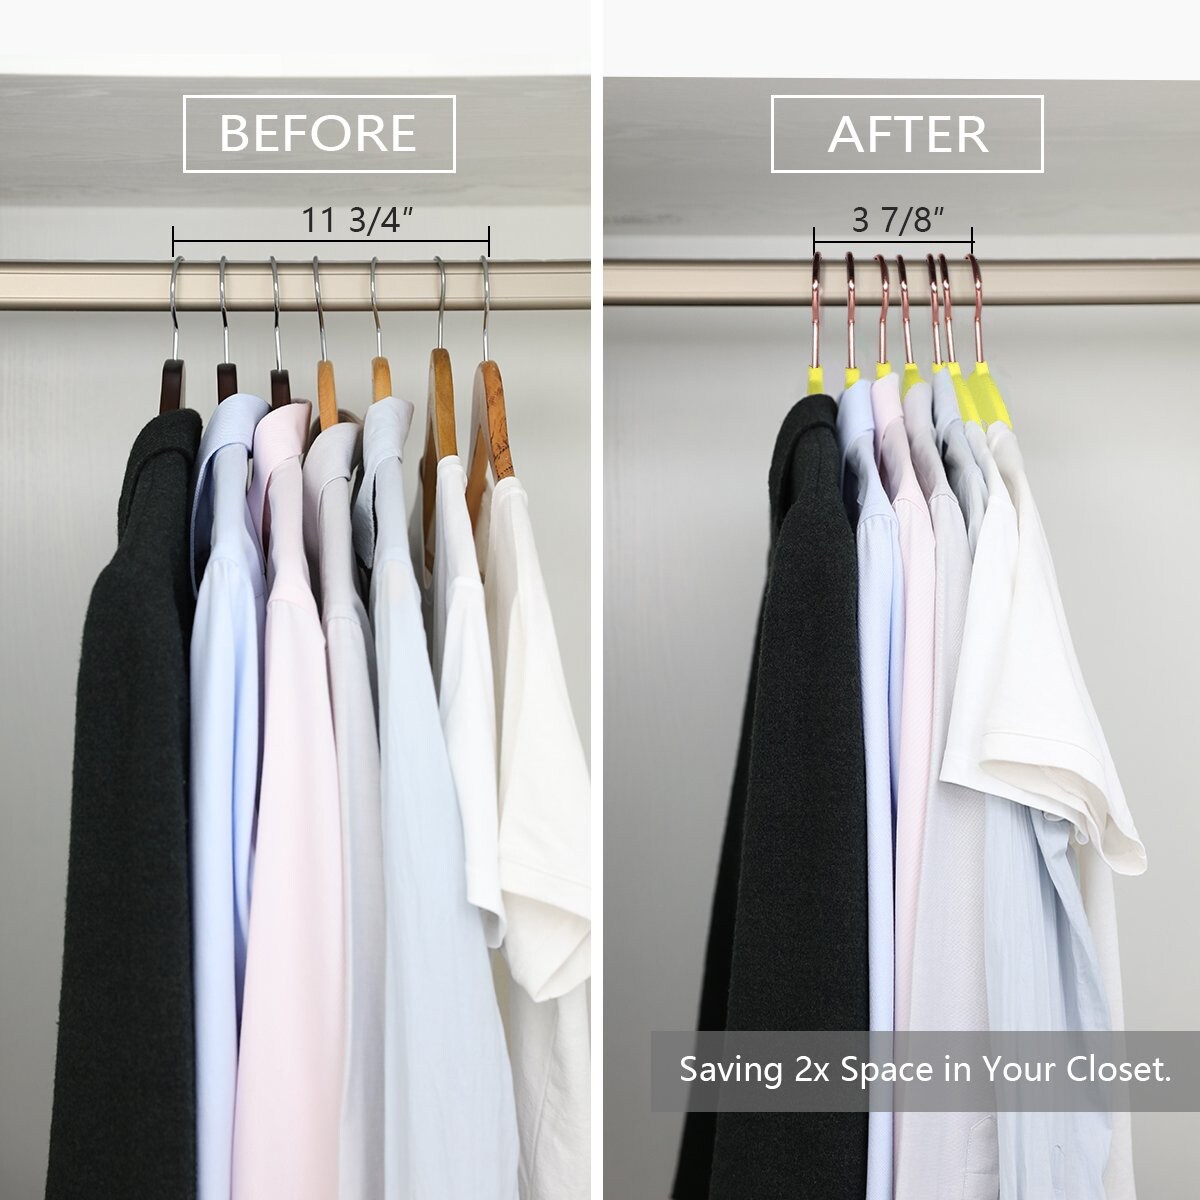 MIZGI Premium Velvet Hangers Chrome Hooks,Space Saving Clothes Hangers,Rounded Hangers for Coat,Sweater,Jackets,Pants,Shirts Heavyduty- Non Slip No Shoulder Bump Suit Hangers Pink Pack of 30 